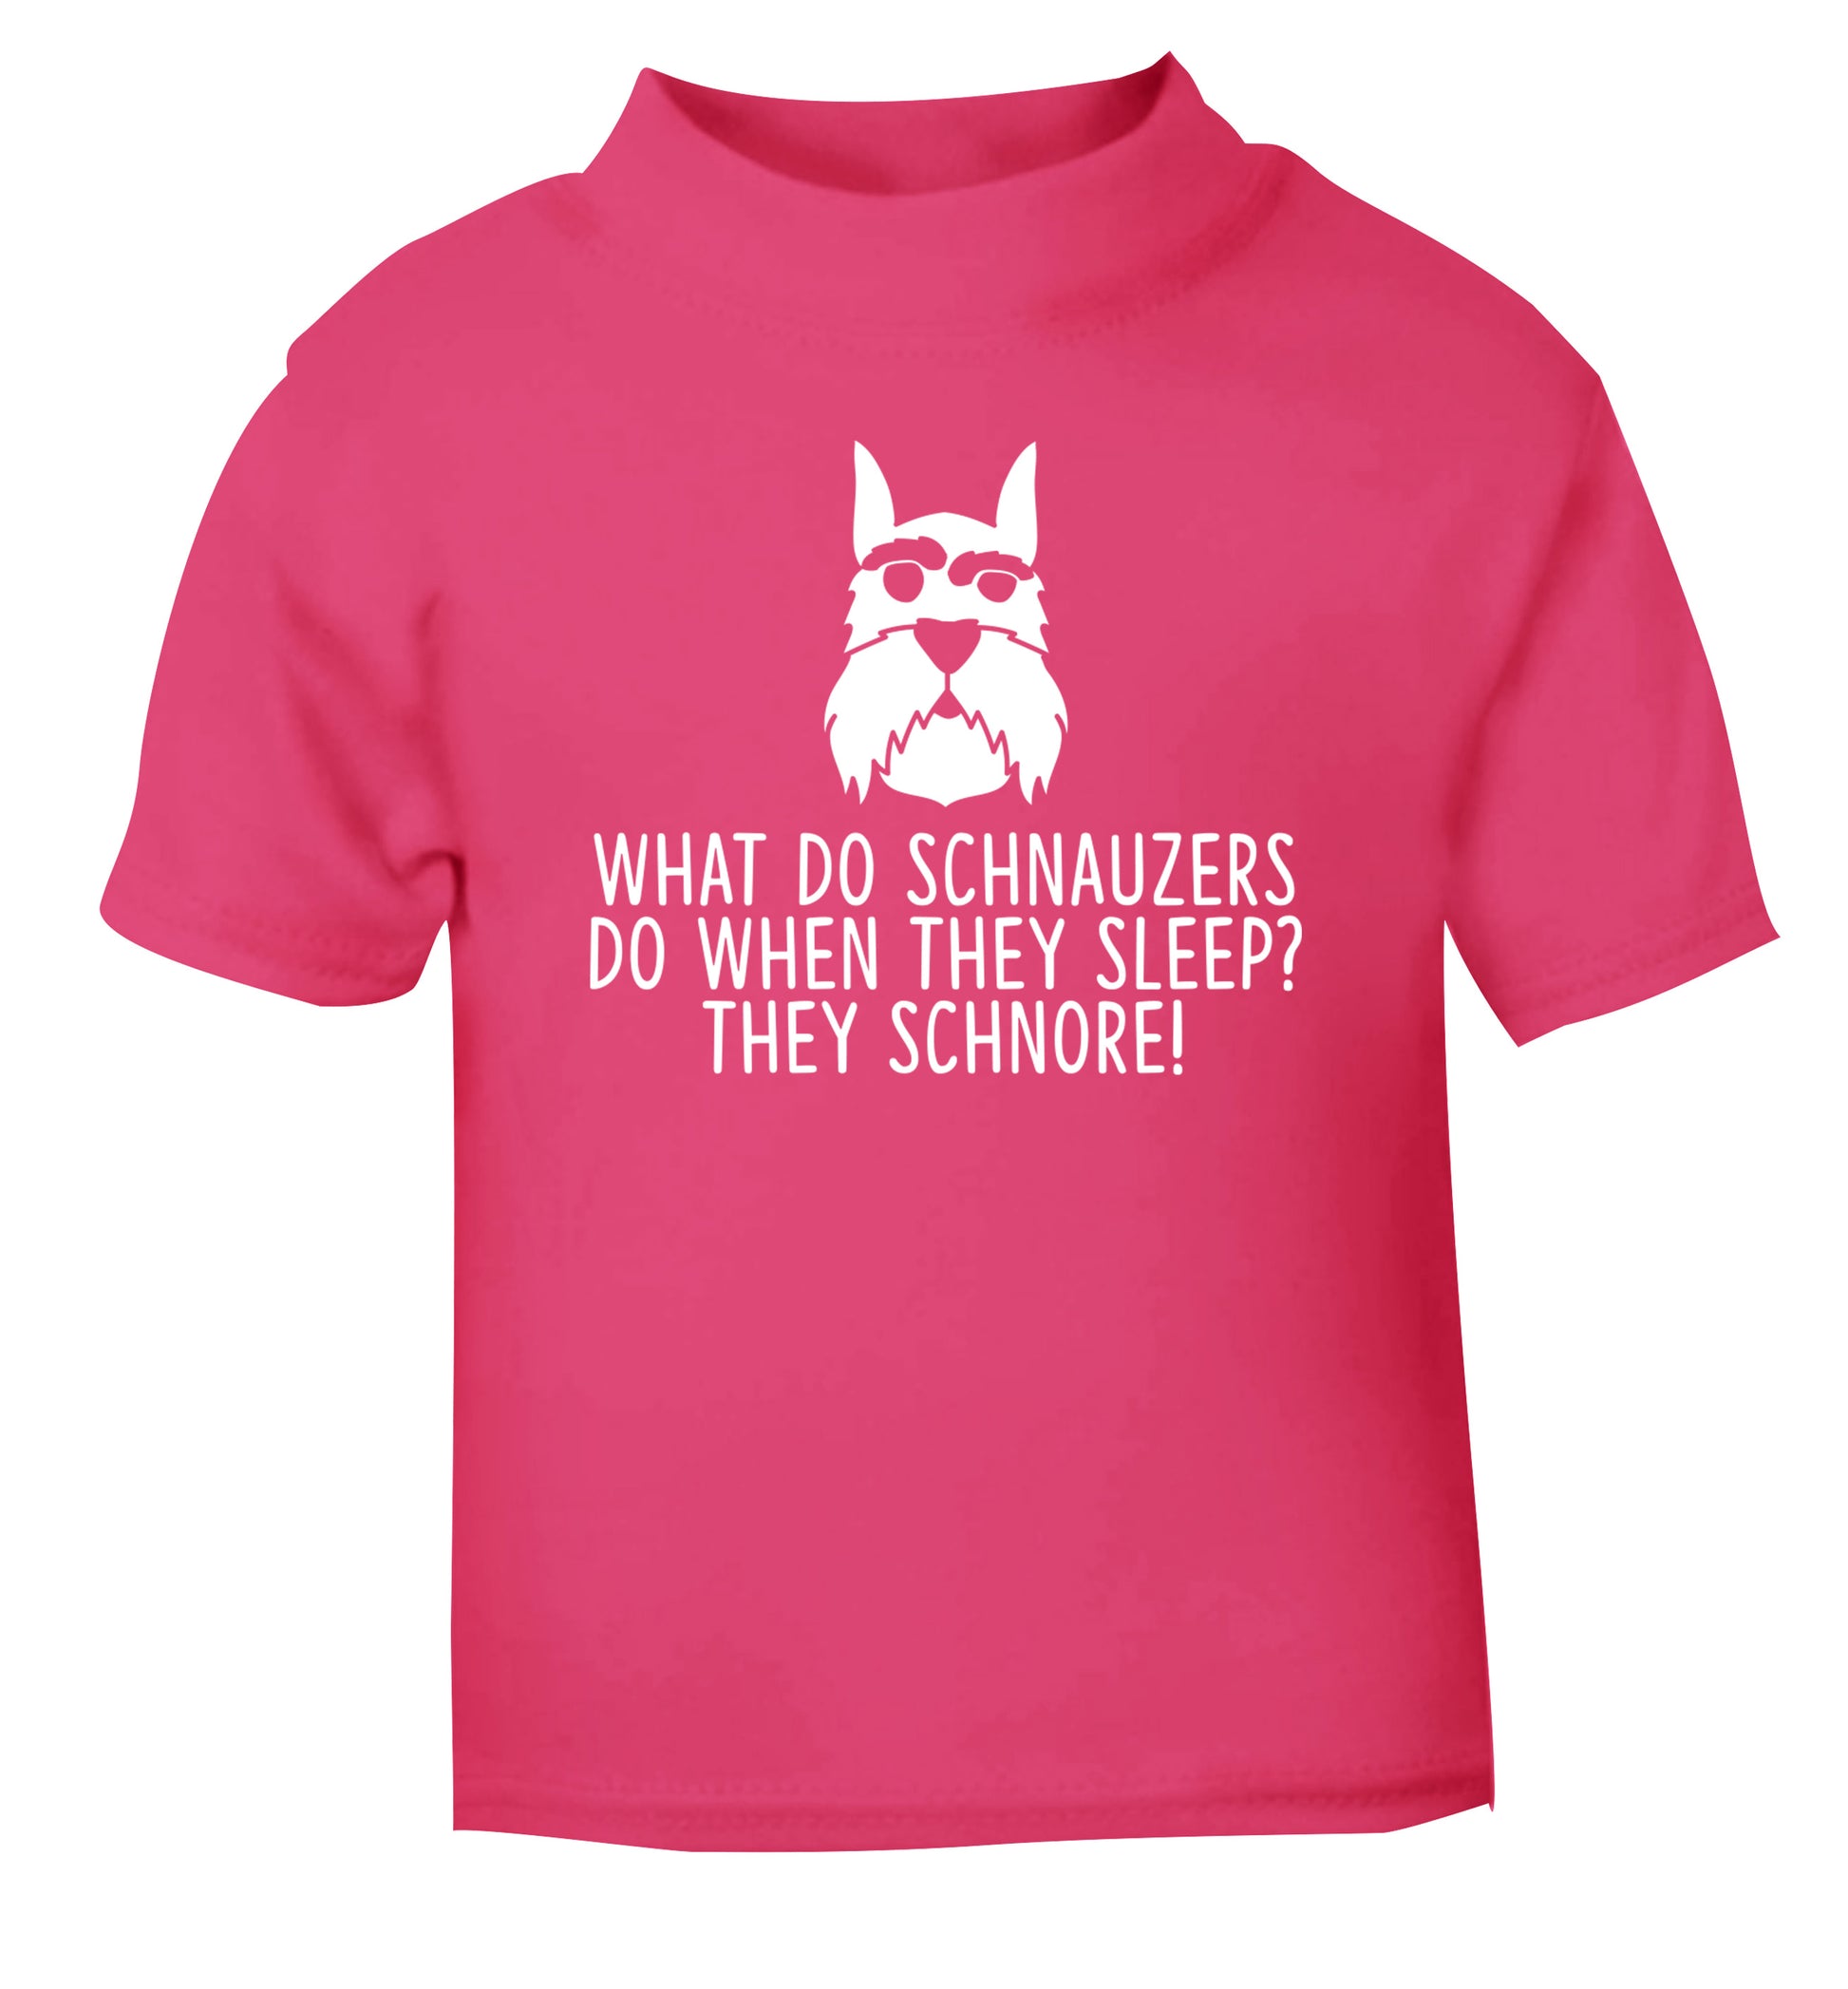 What do schnauzers do when they sleep? Schnore! pink Baby Toddler Tshirt 2 Years